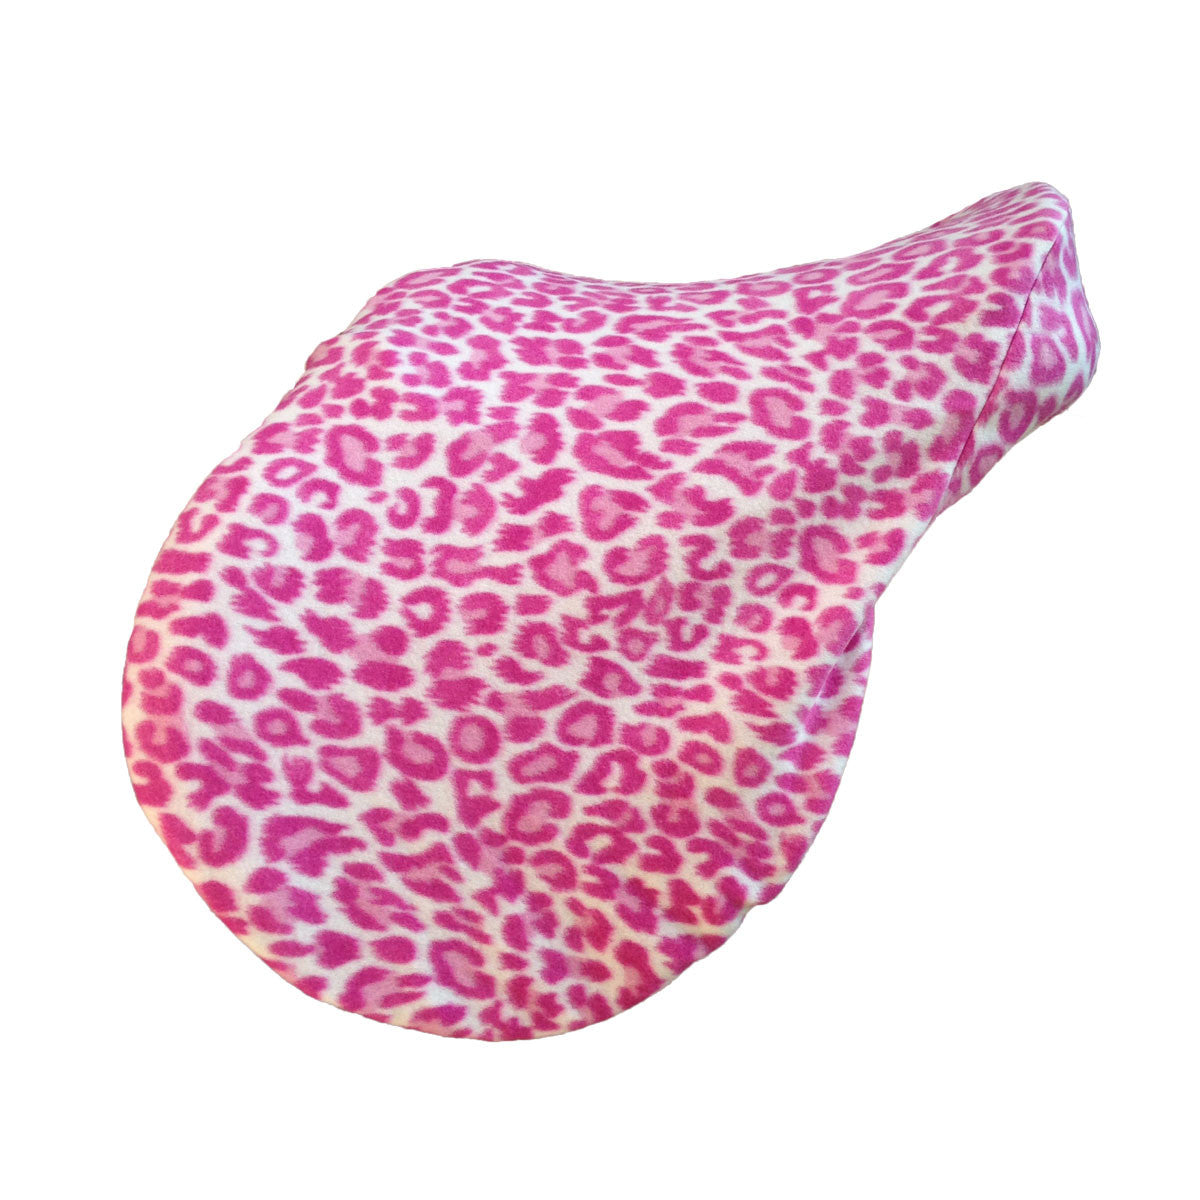 Saddle Cover Pink Cheetah